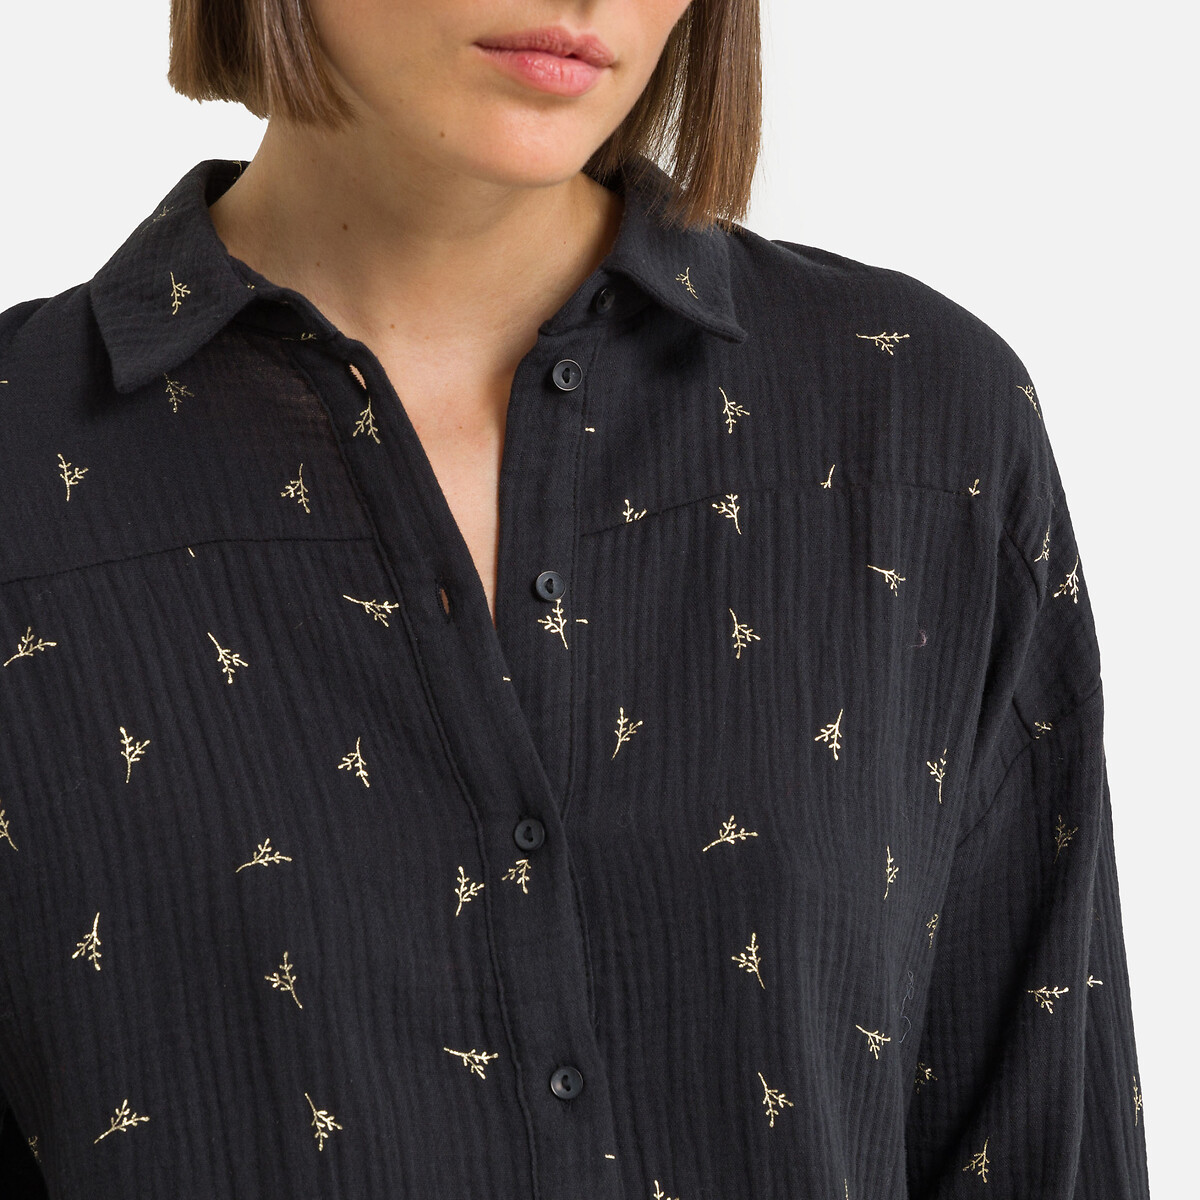 Блузка С вышивкой L черный LaRedoute, размер L - фото 3